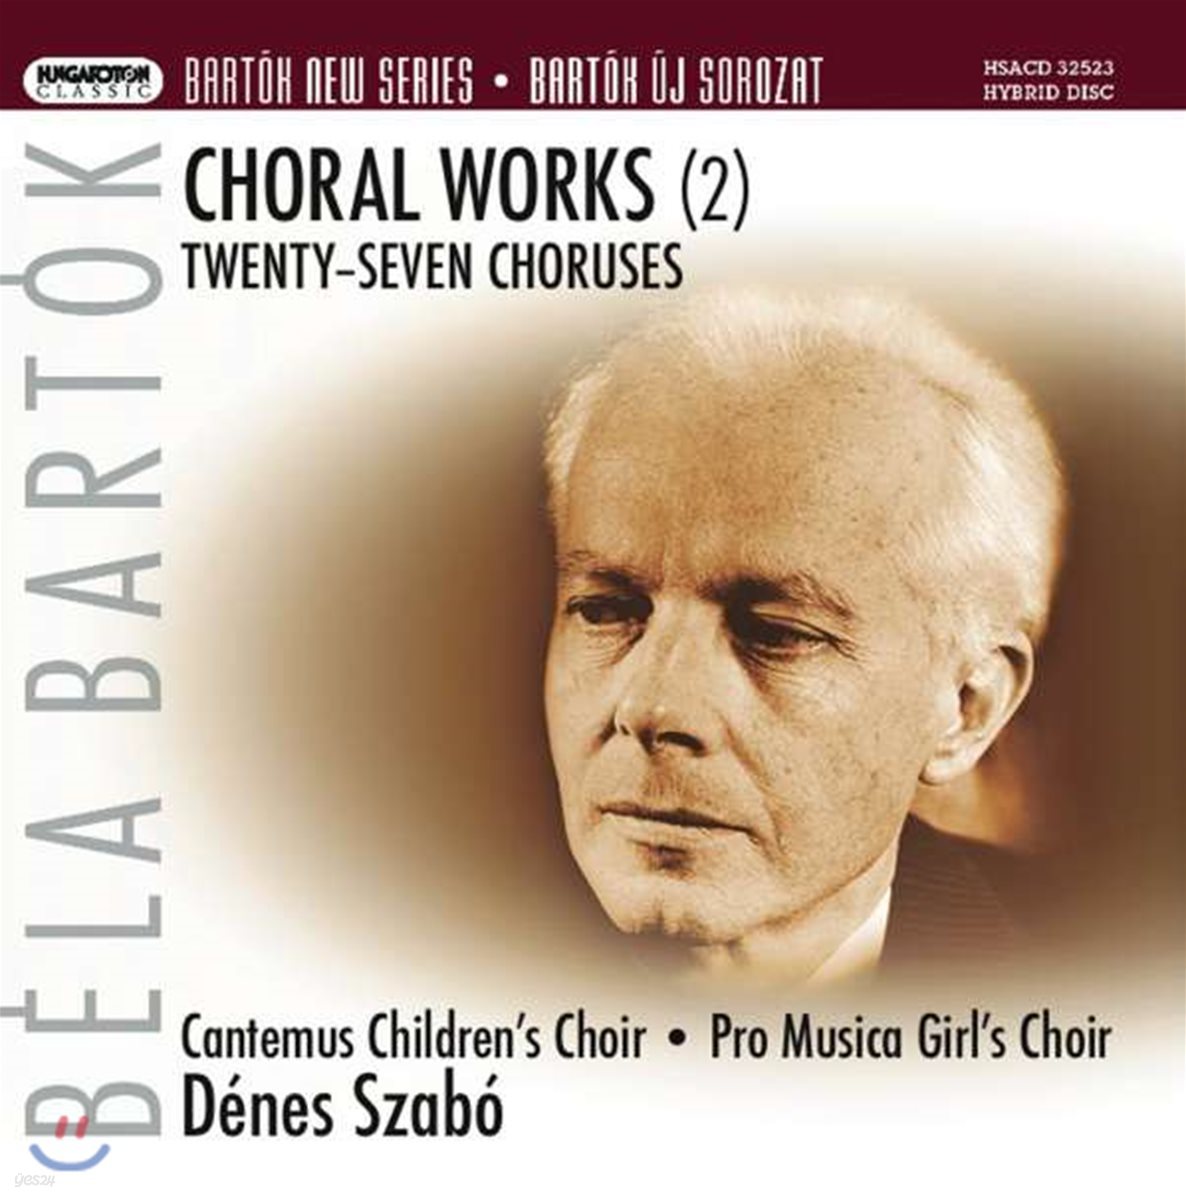 Denes Szabo 바르톡: 합창 작품집 2권 - 27개의 헝가리 민요 합창 (Bartok: Choral Works 2 - Twenty-Seven Choruses)